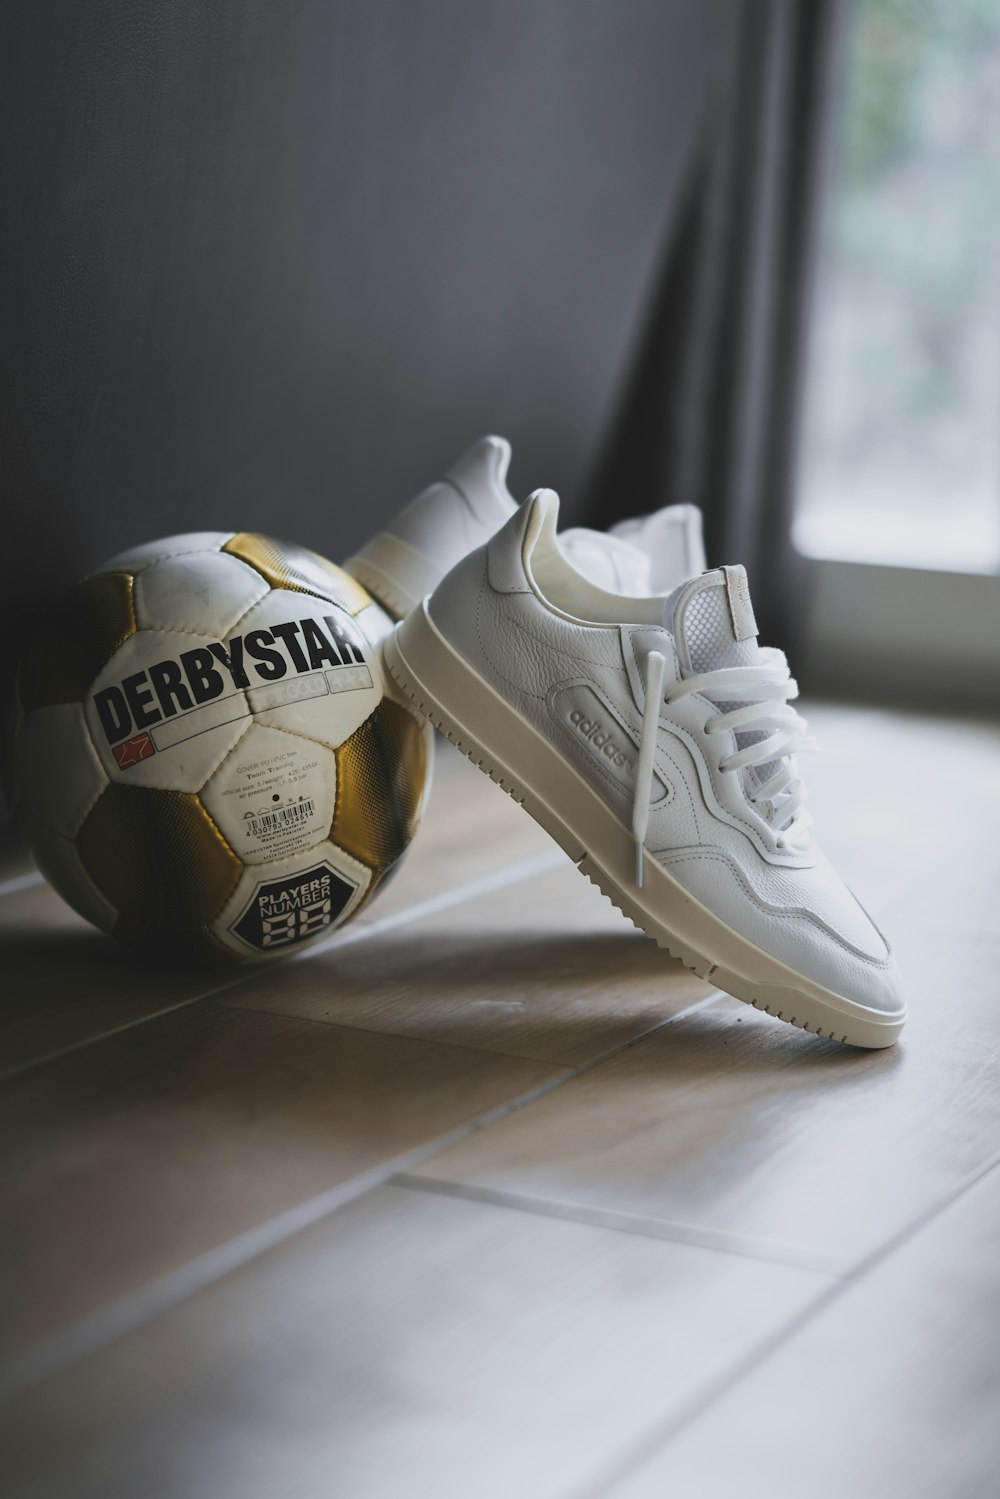 Pair of low-top sneakers beside Derbystar soccer ball photo Free Image on Unsplash